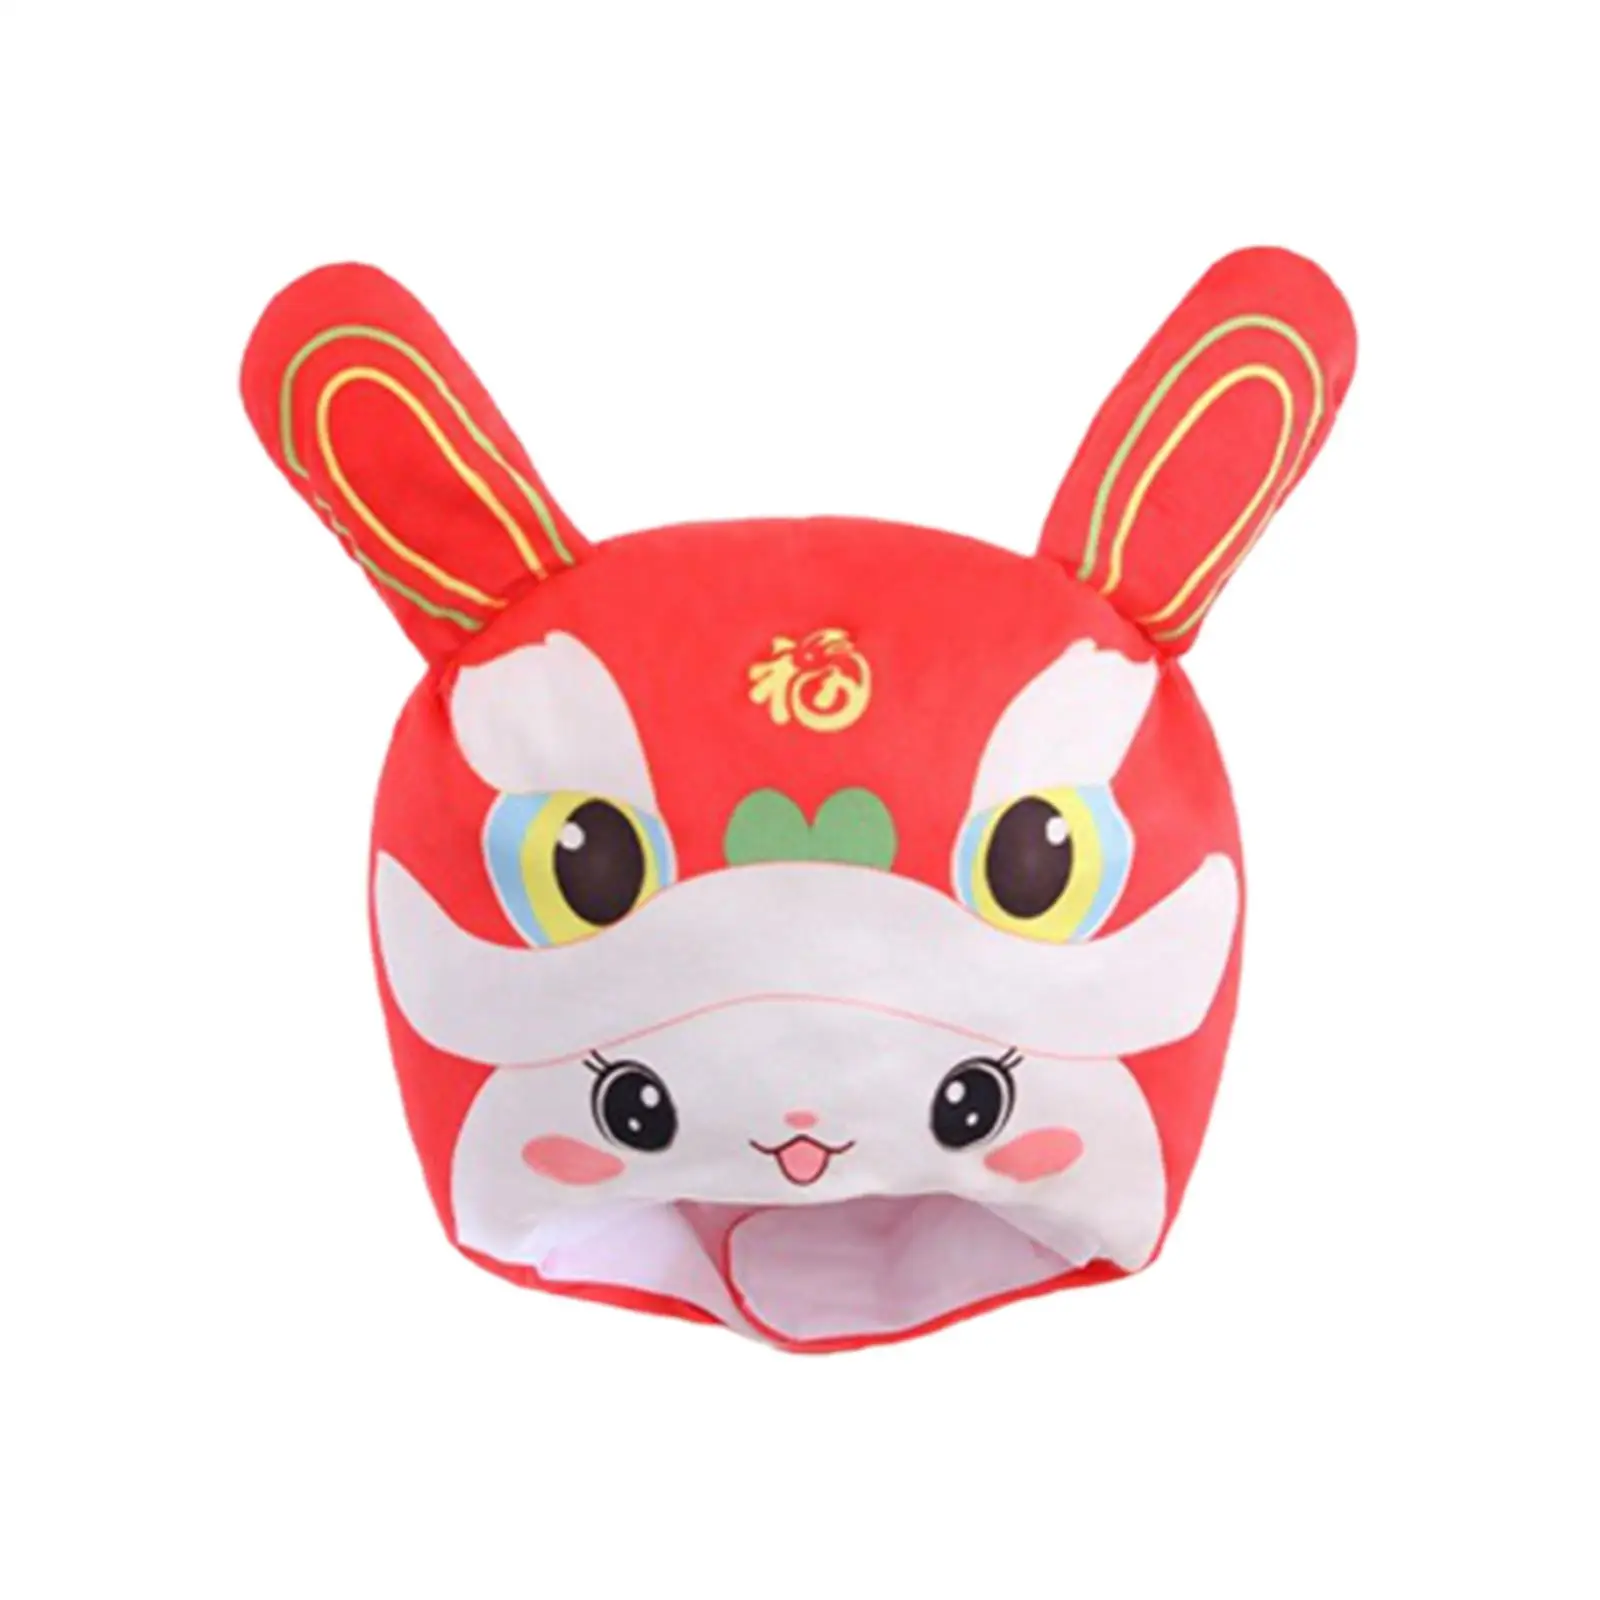 Lion Rabbit Plush Hat Creative Adult Kids Headwear for Cosplay Dress